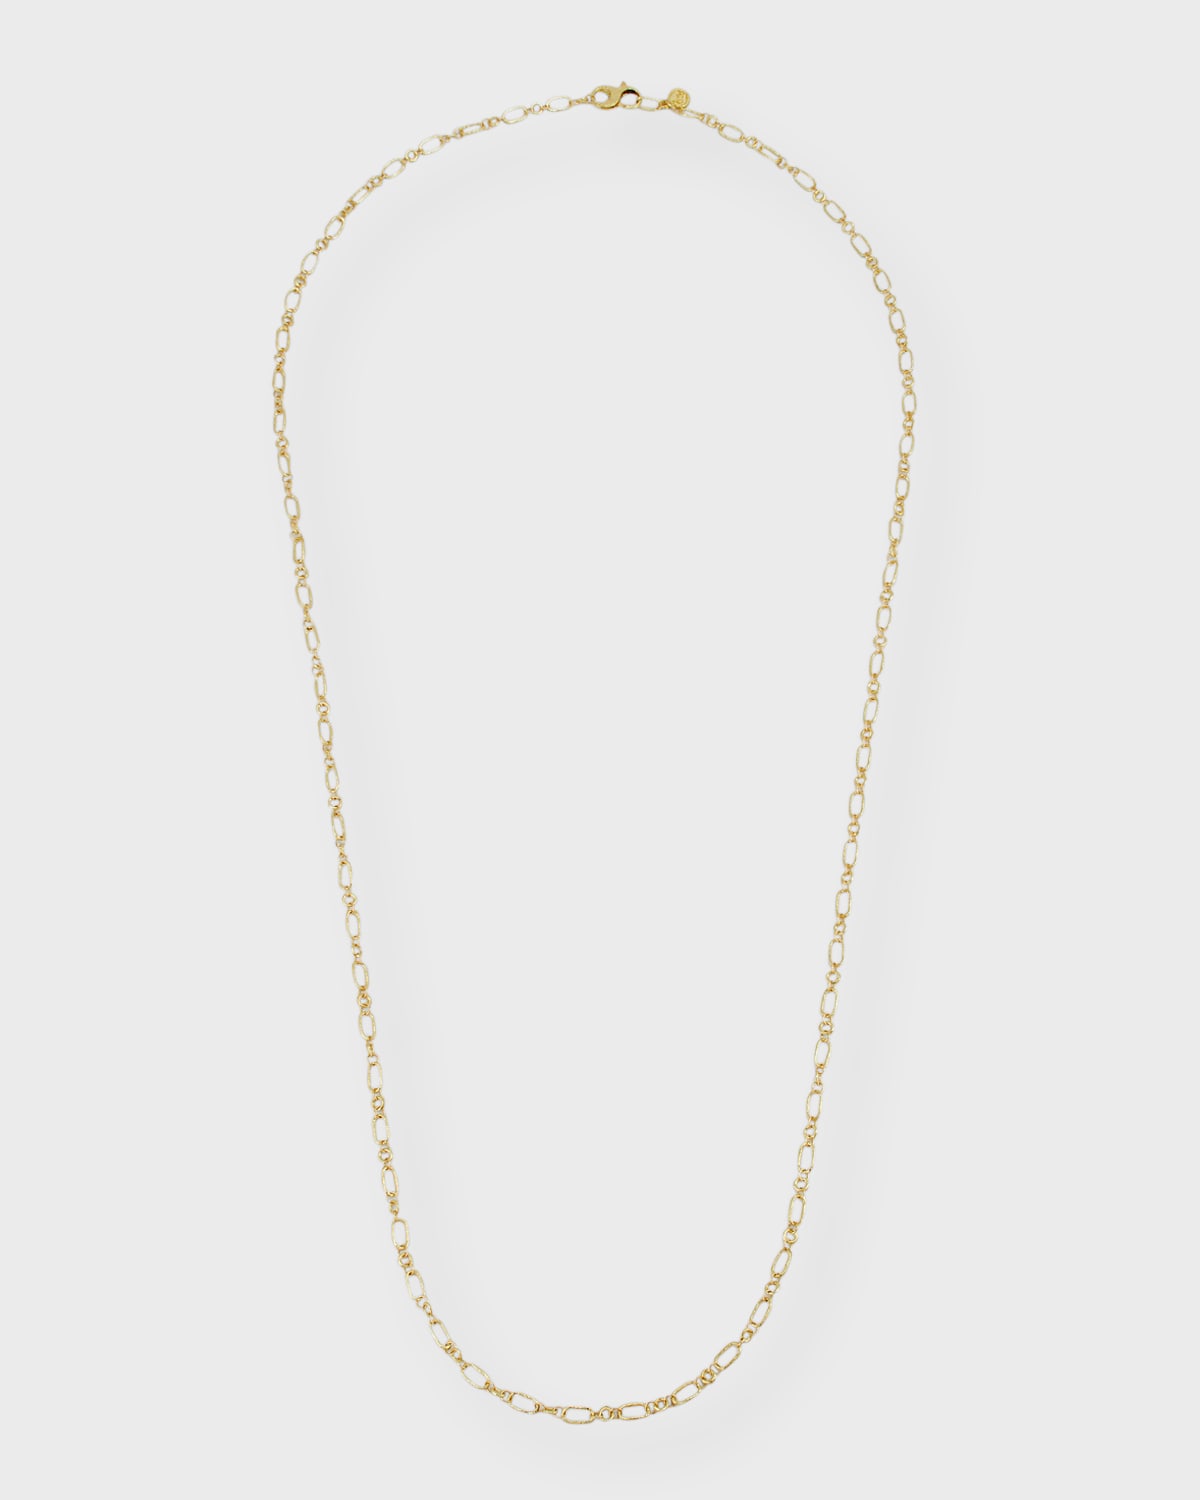 Dominique Cohen 18k Yellow Gold Petite Paperclip Chain Necklace, 42"